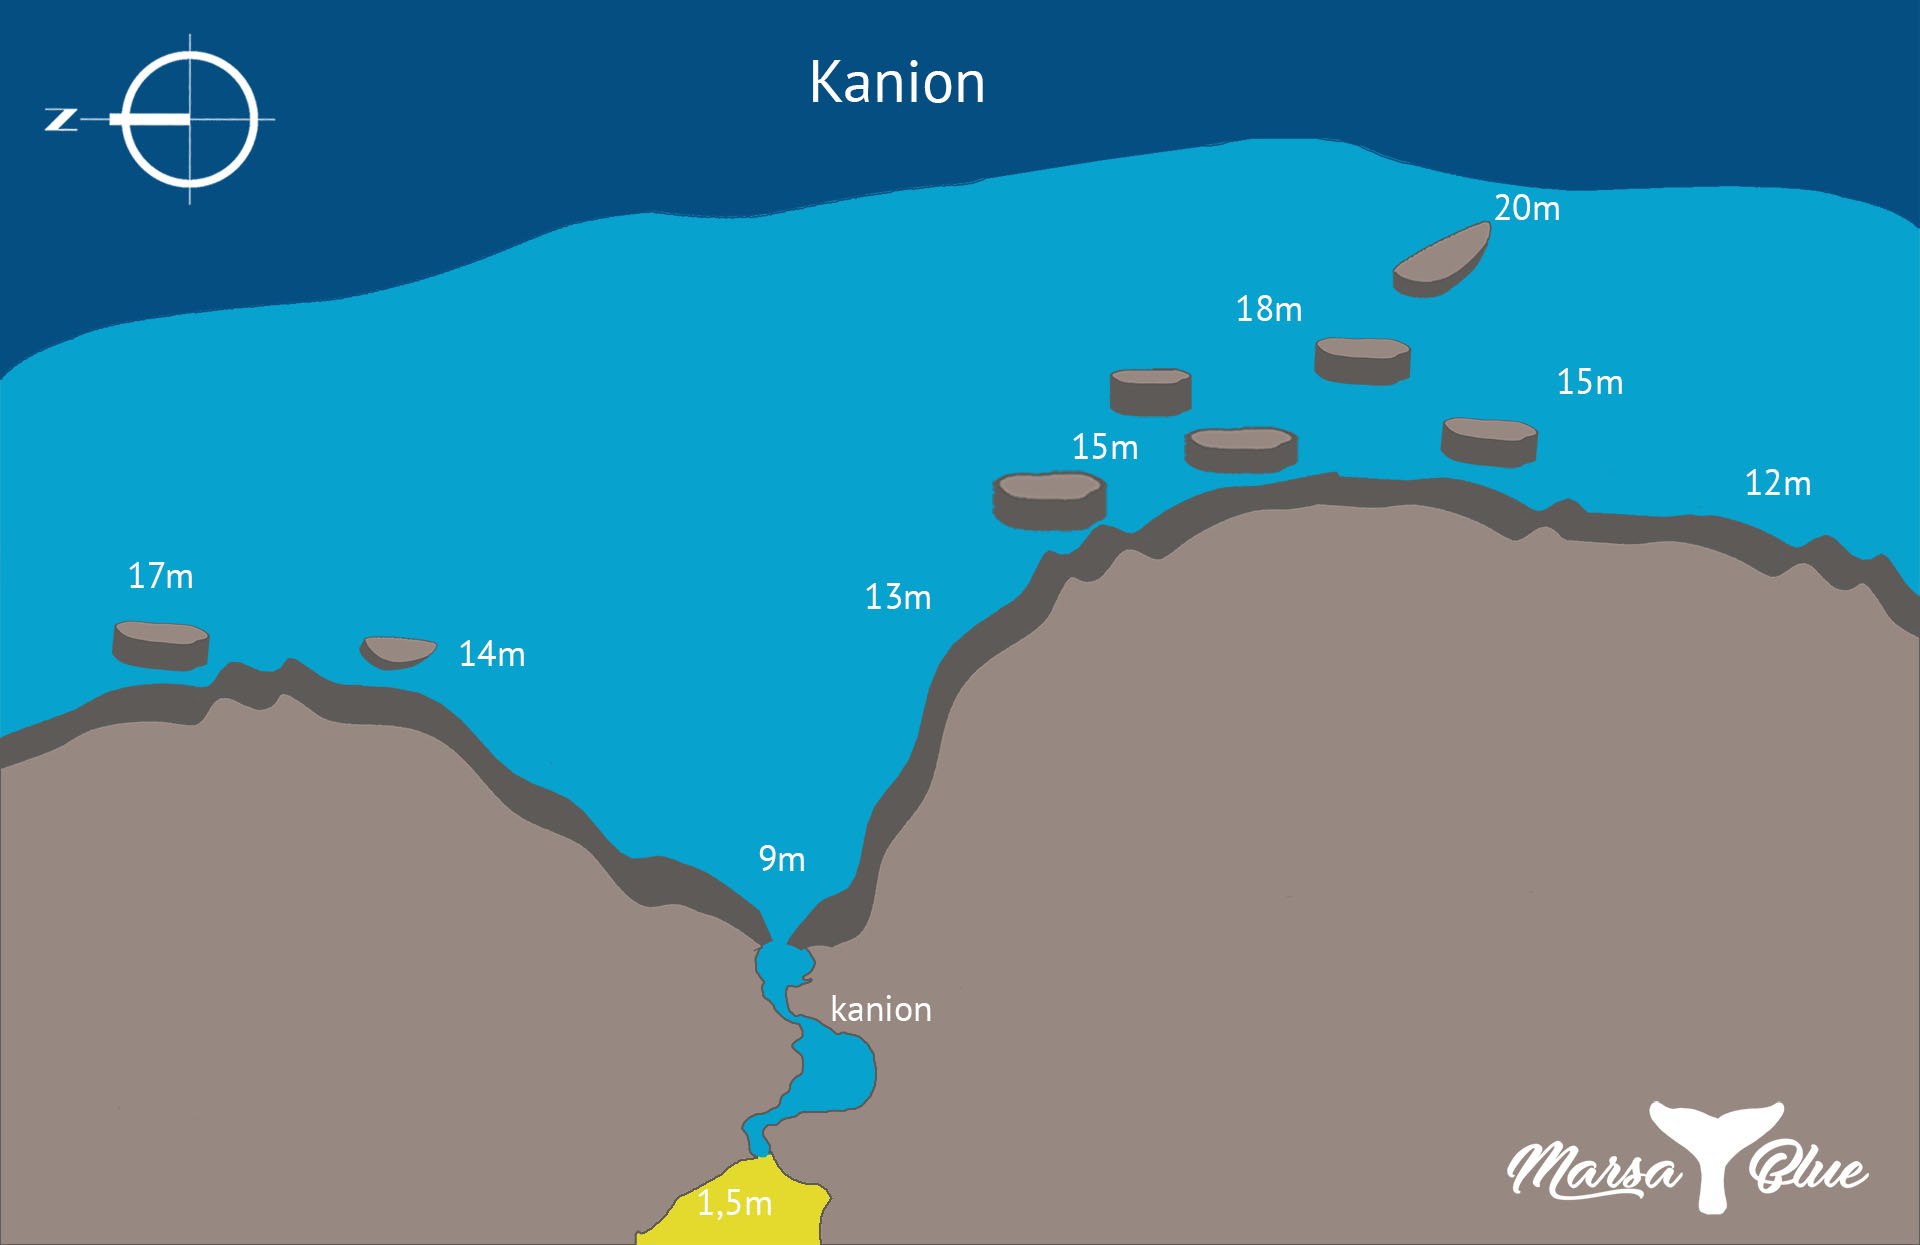 Kanion - Mapa spotu nurkowego